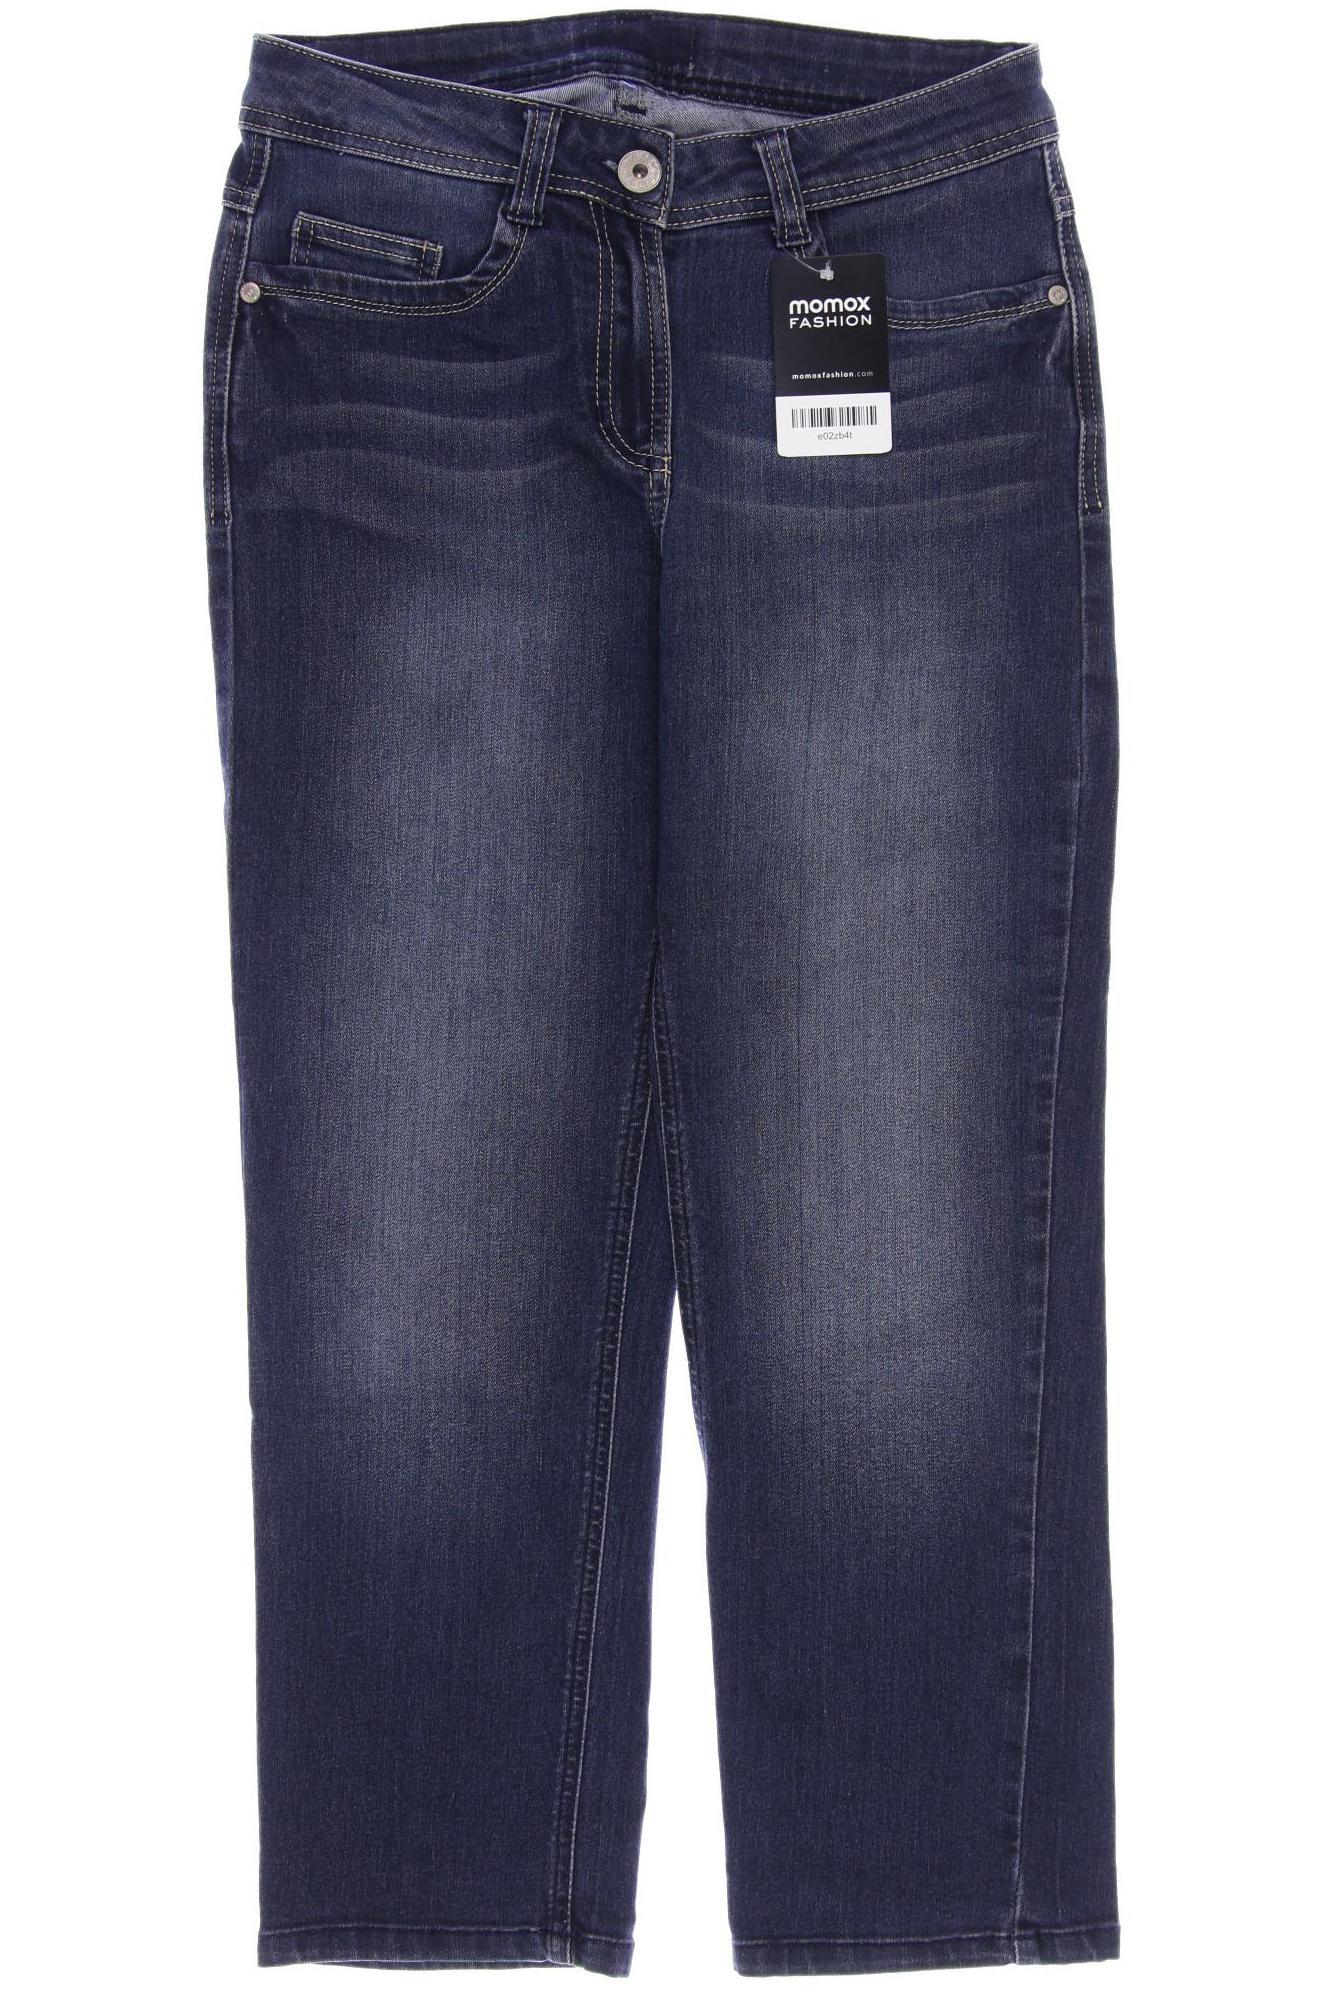 Cecil Damen Jeans, blau, Gr. 32 von cecil